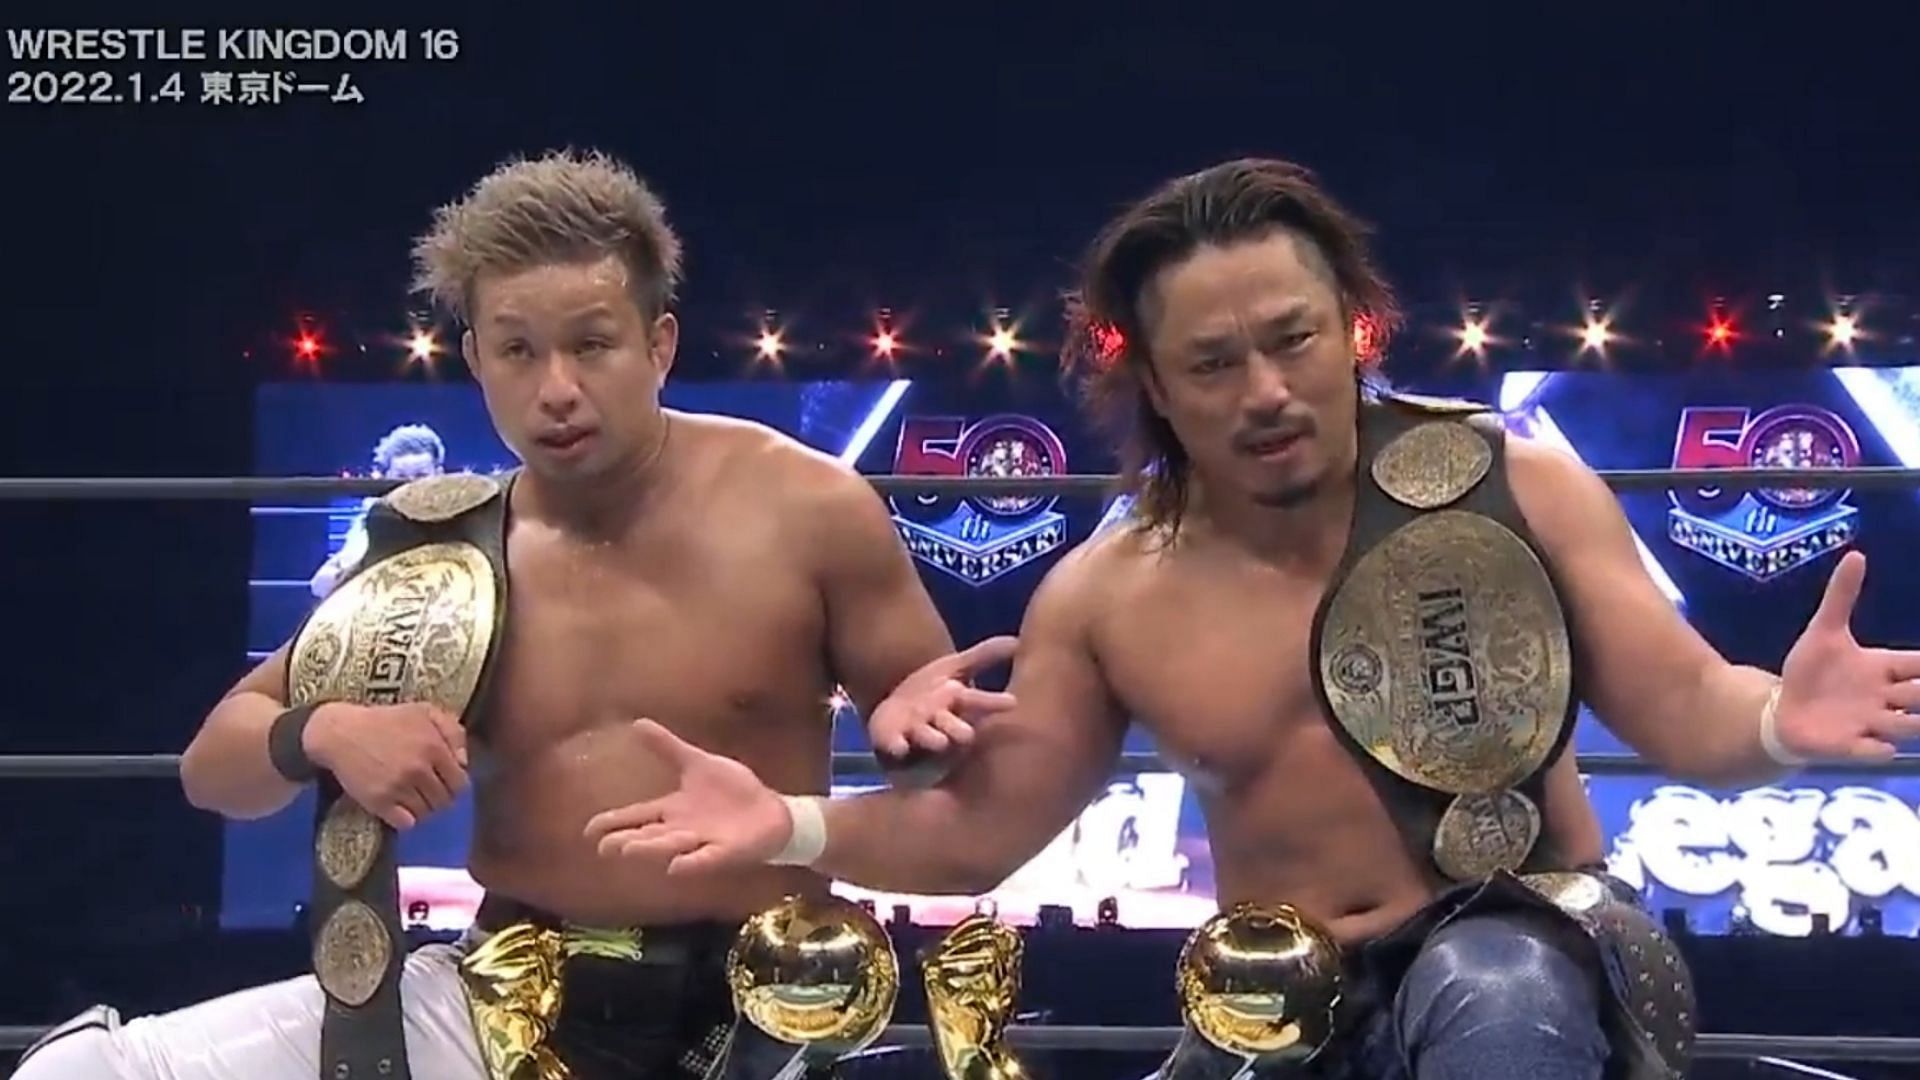 YOSHI-HASHI and Hirooki Goto are the new IWGP Tag Team Champions